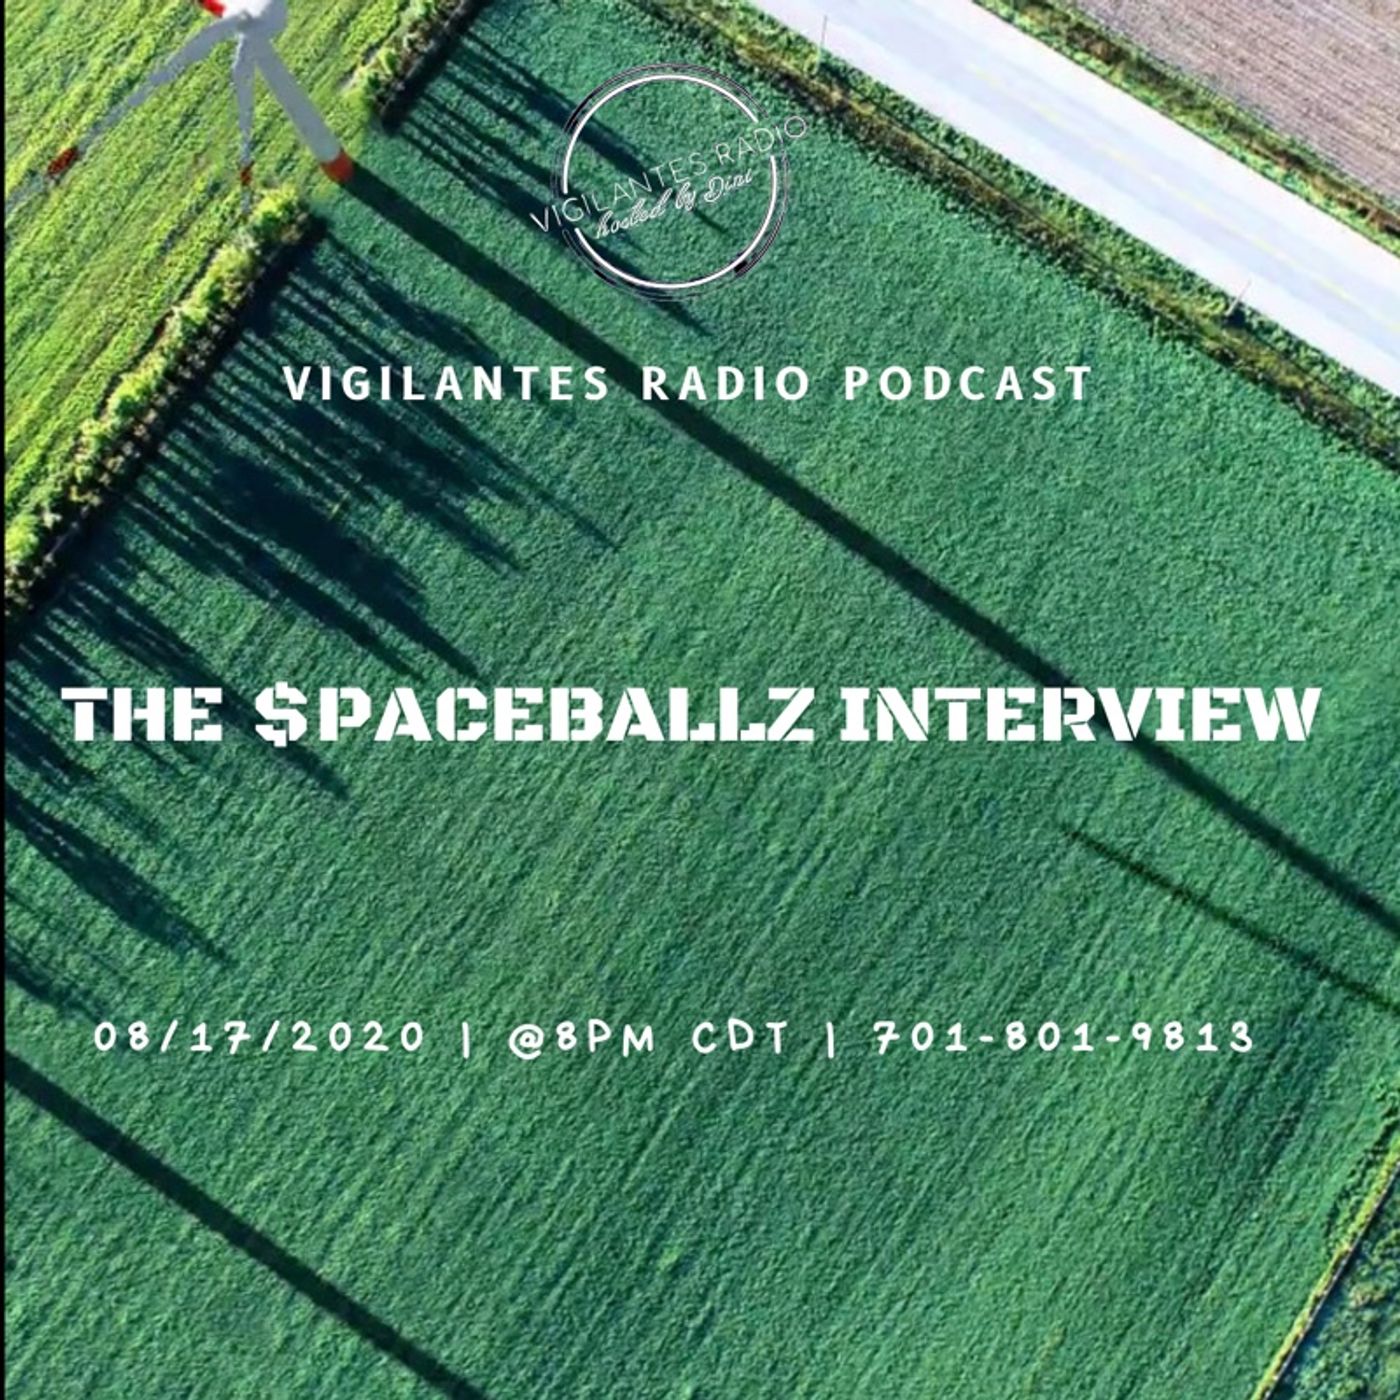 The $paceballz Interview. Image